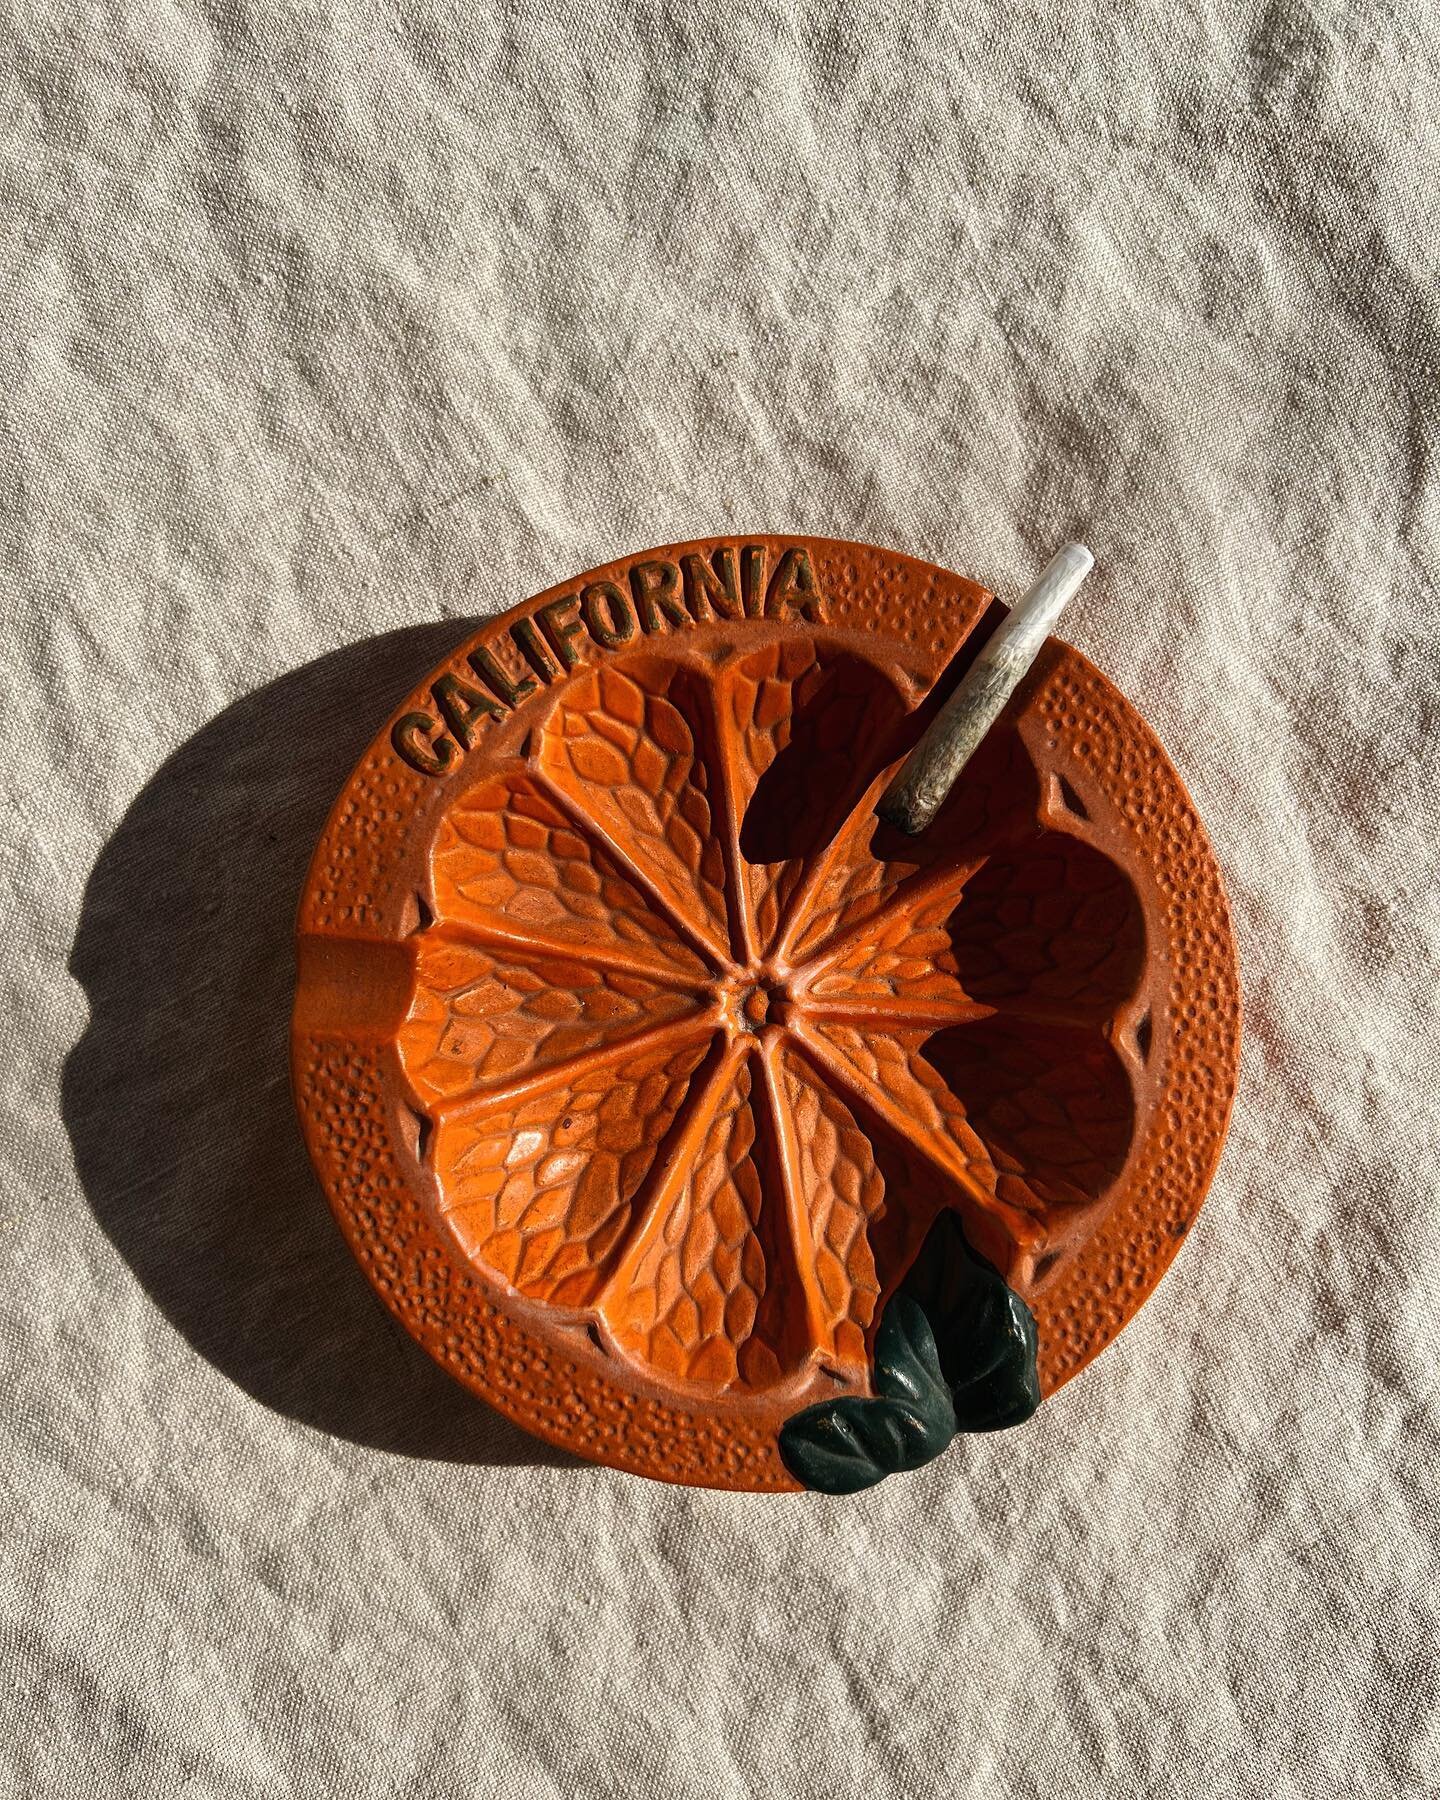 [sold] vintage california citrus ashtray. 🍊